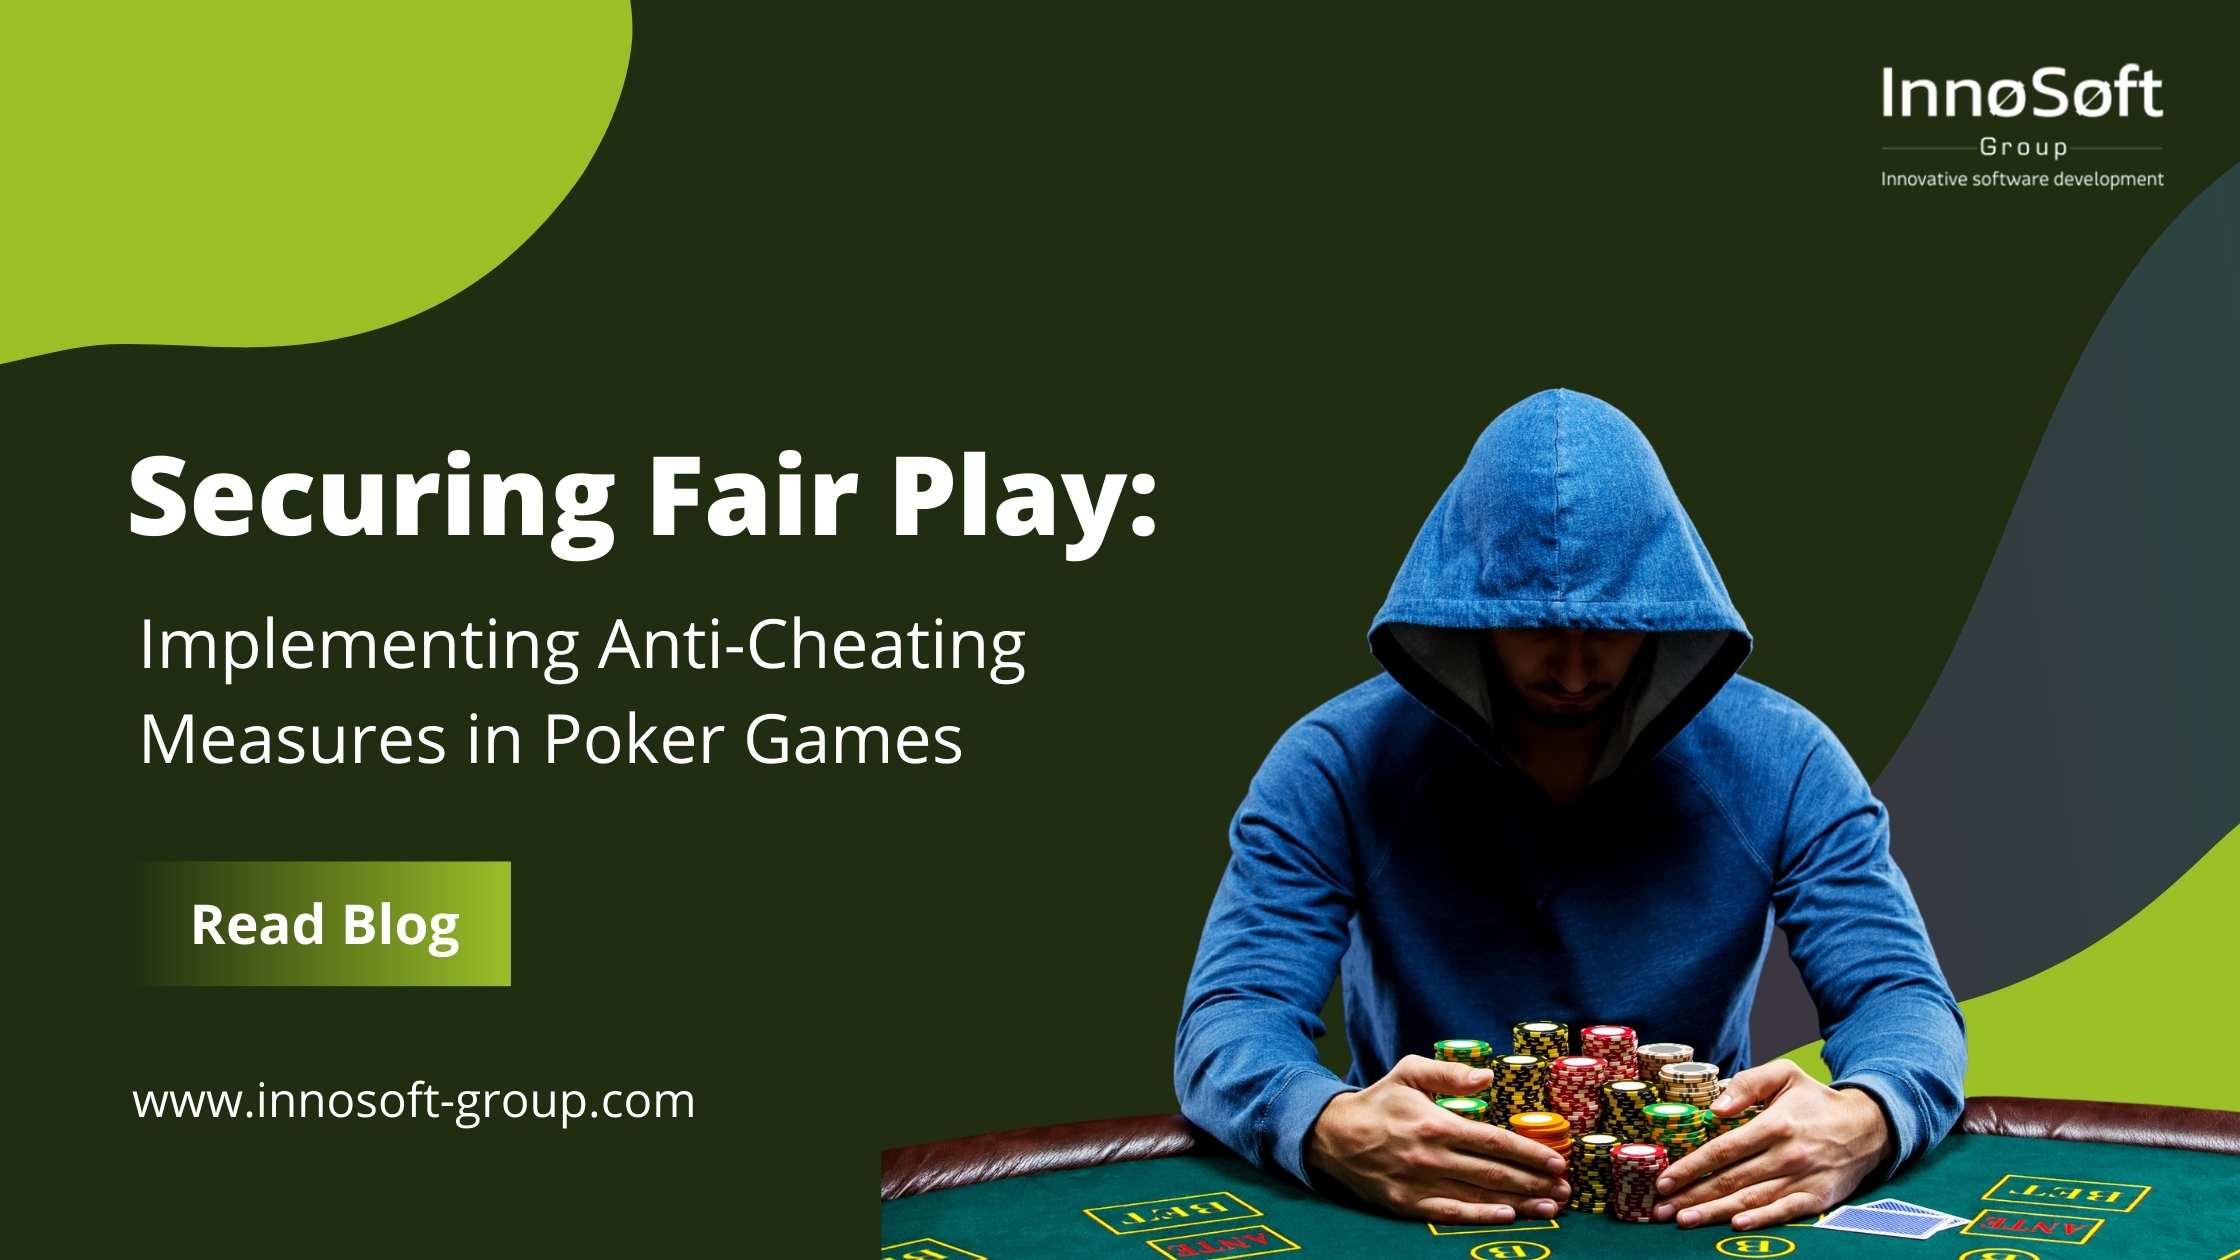 Anti-Cheating Measures in Poker Games